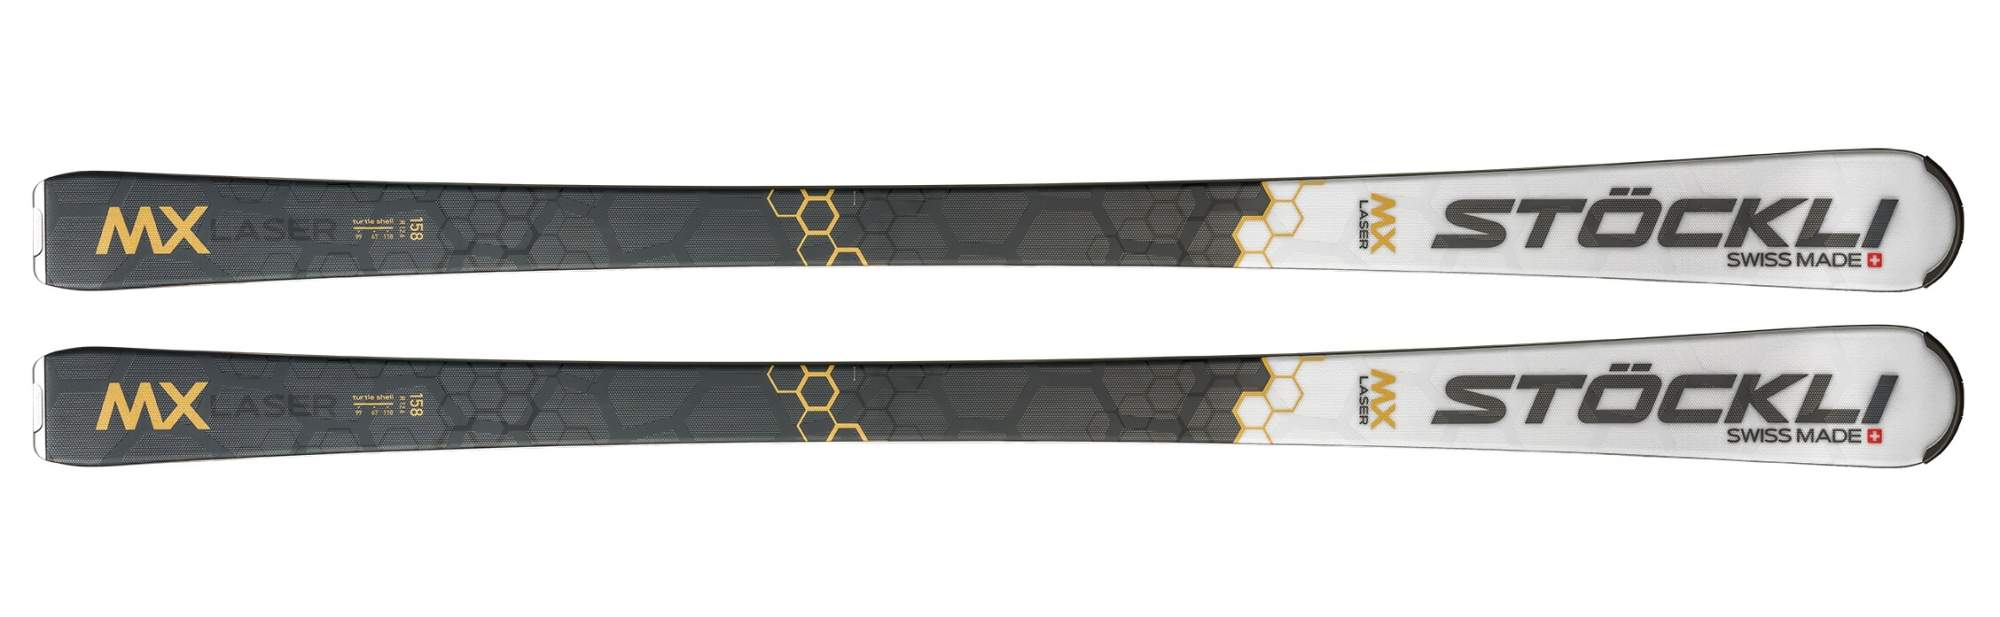 Горные лыжи Stockli Laser MX + MC 11 2022 grey/white, 152 см